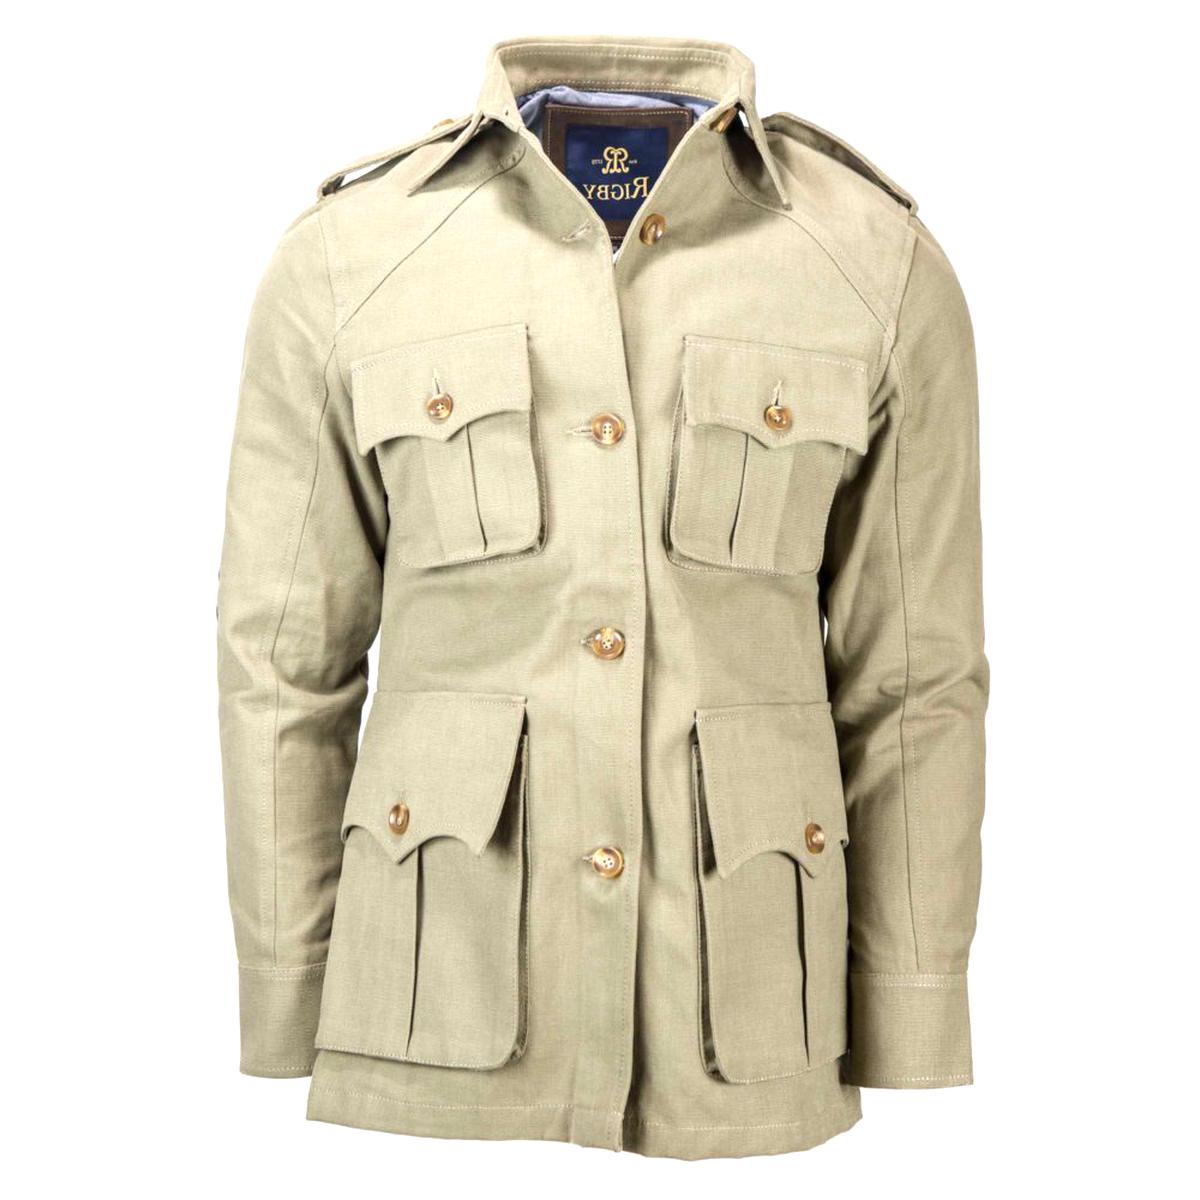 Safari Jacket for sale in UK | 67 used Safari Jackets